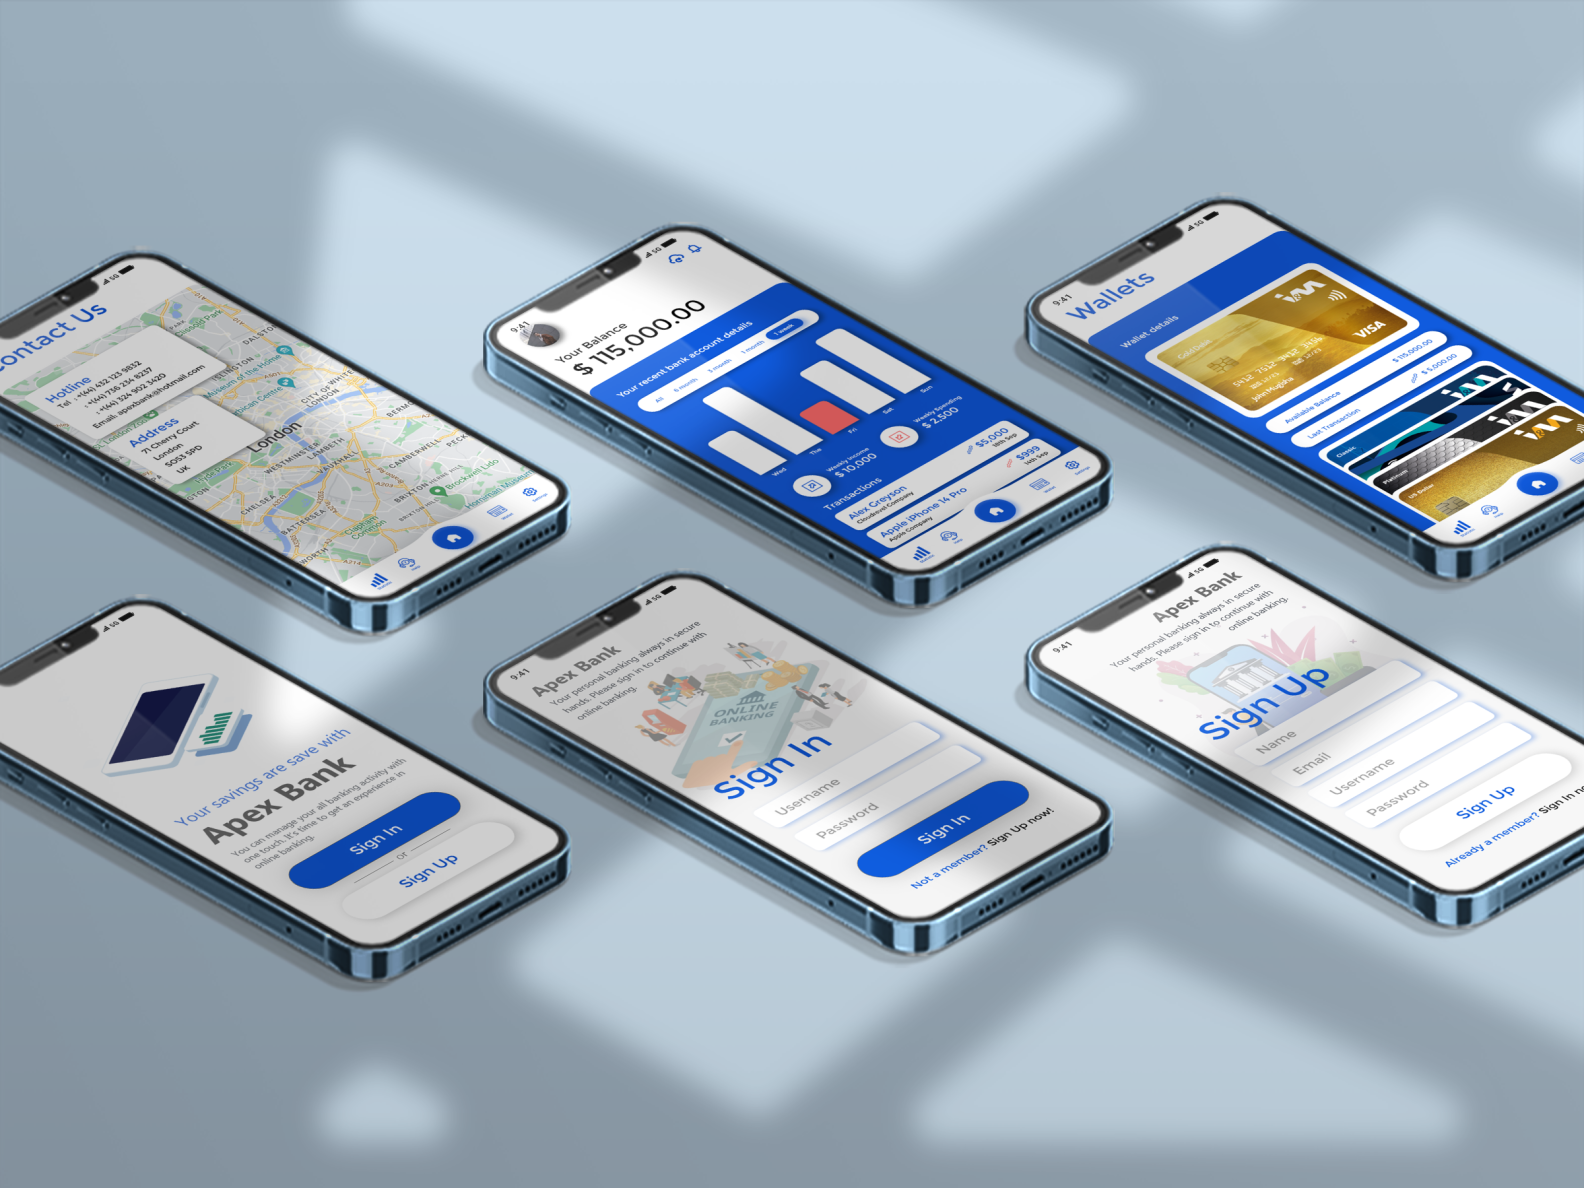 Apex Bank - Mobile Banking App by Raveena Amarasiriwardena on Dribbble